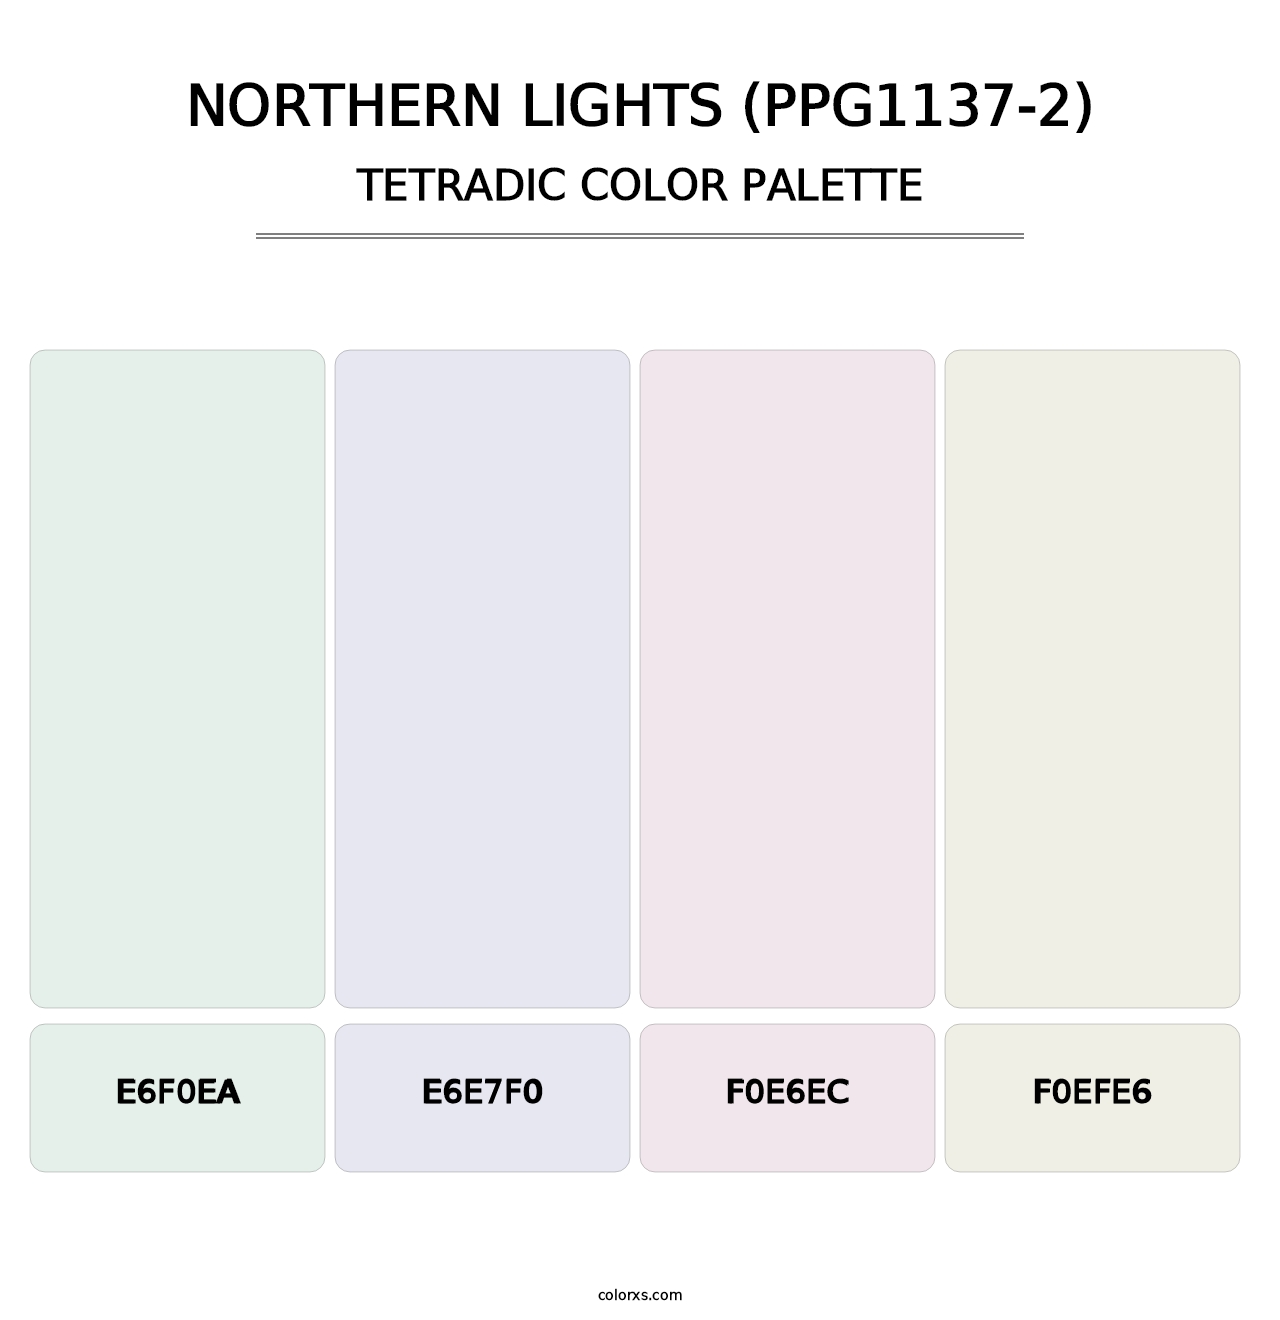 Northern Lights (PPG1137-2) - Tetradic Color Palette